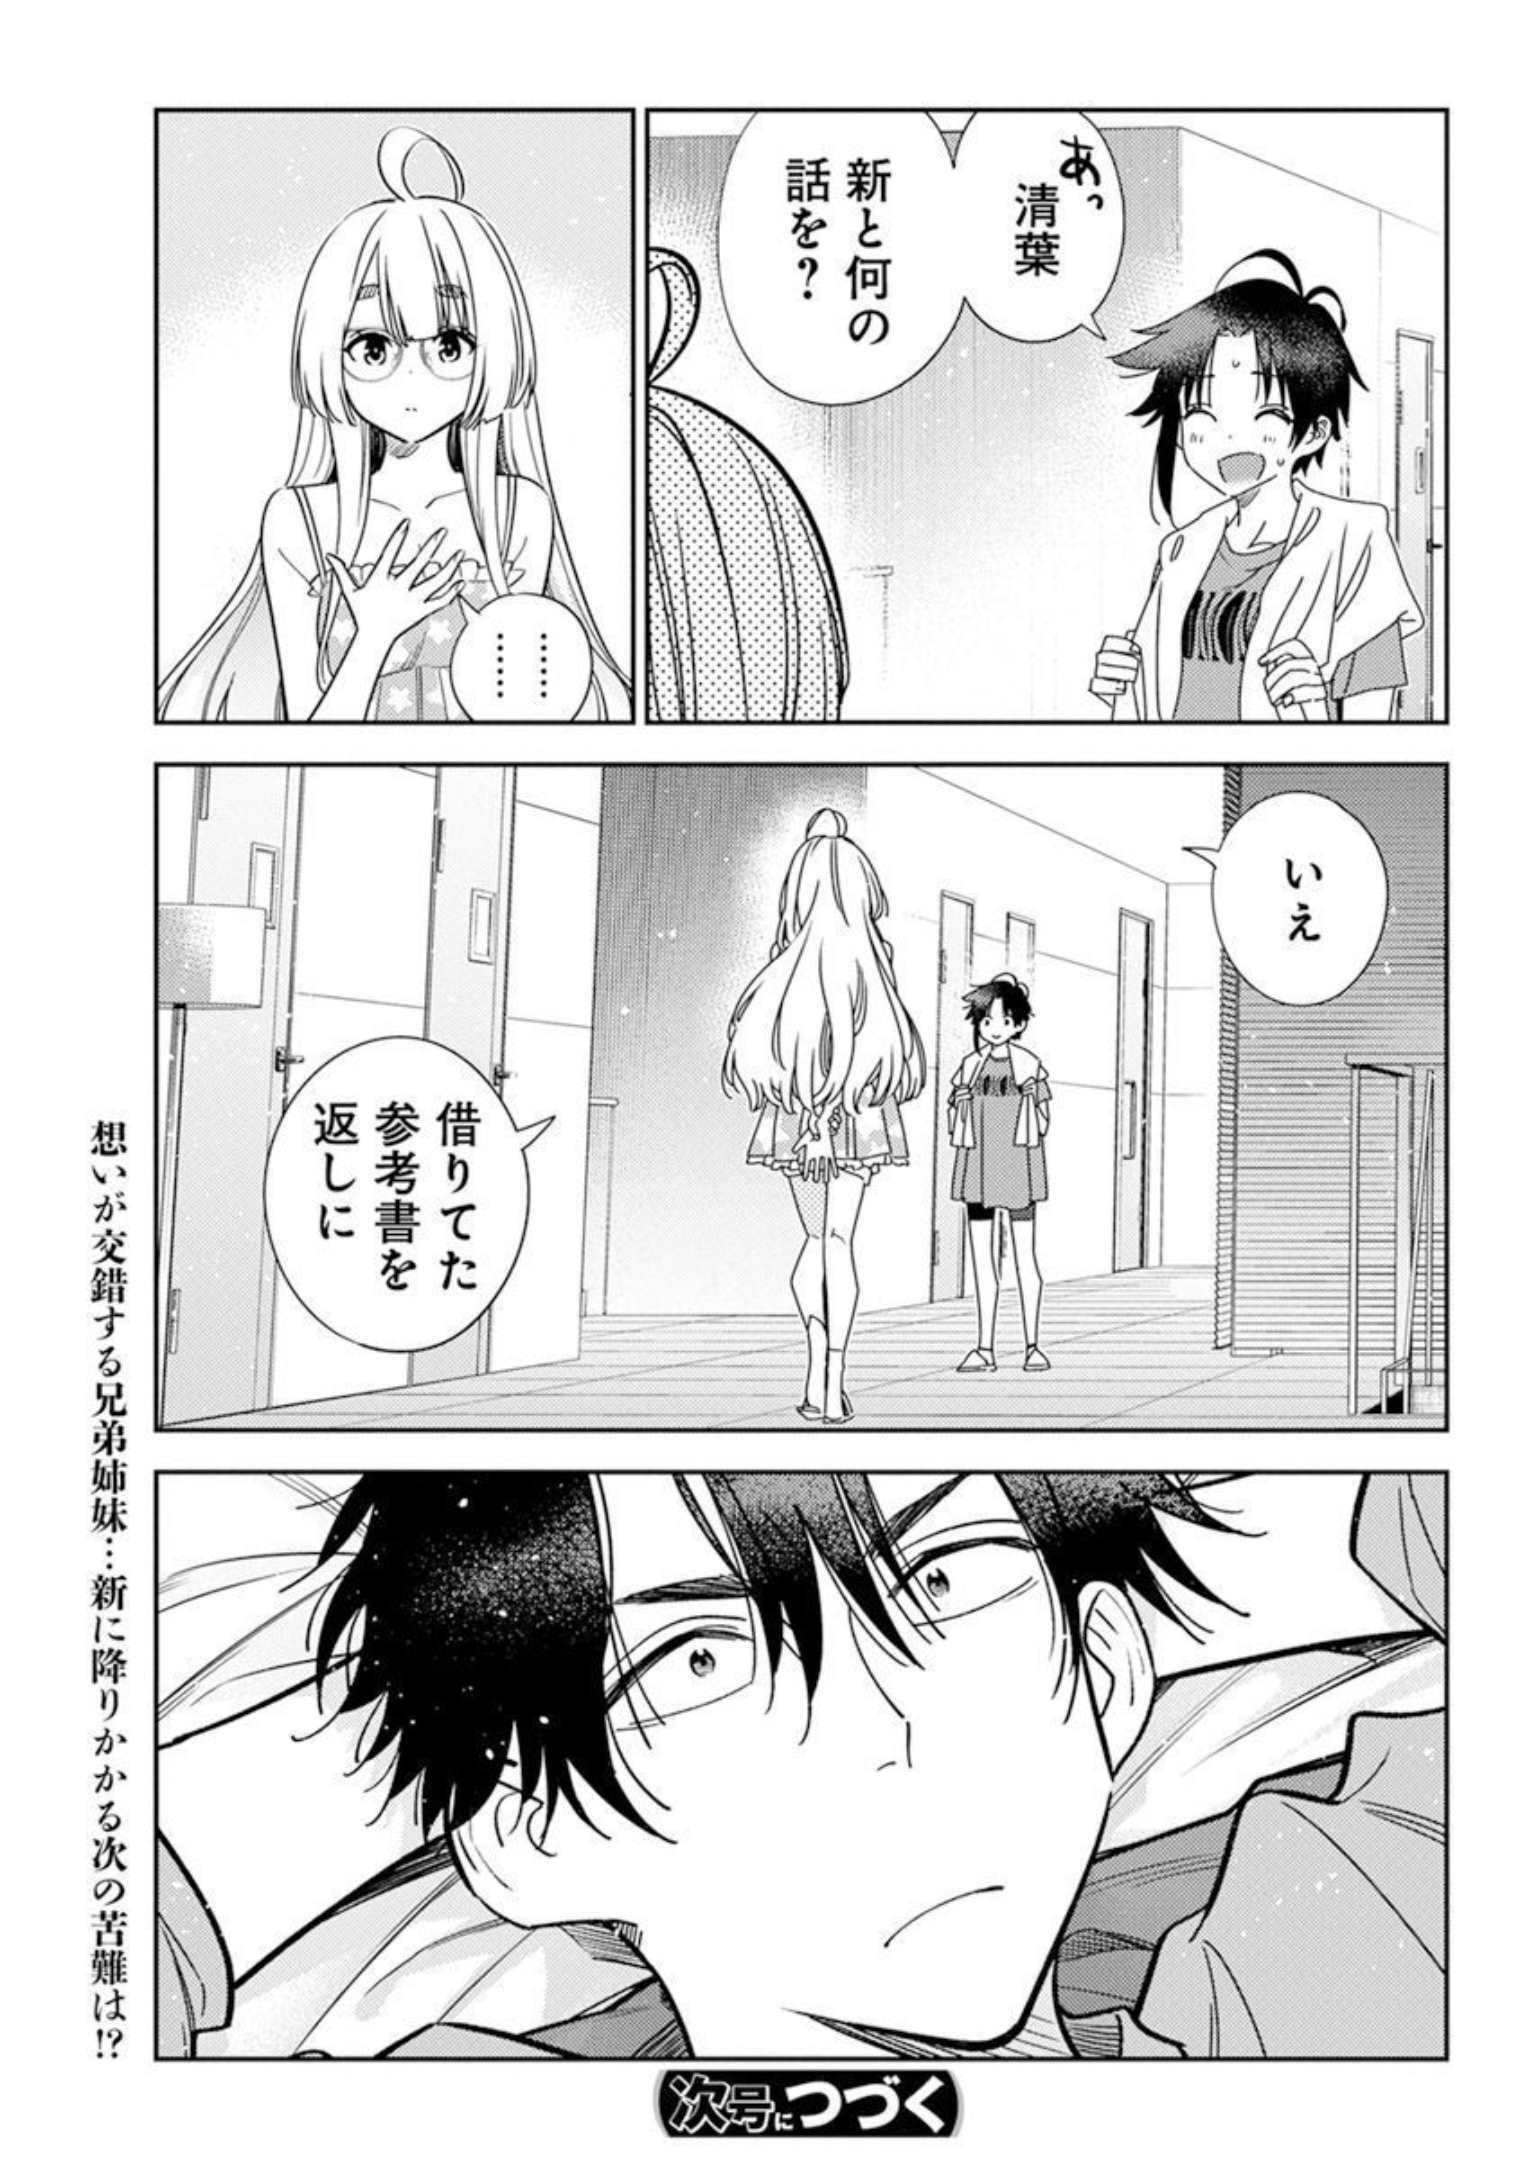 Shiunji-ke no Kodomotachi (Children of the Shiunji Family) - Chapter 04 - Page 21